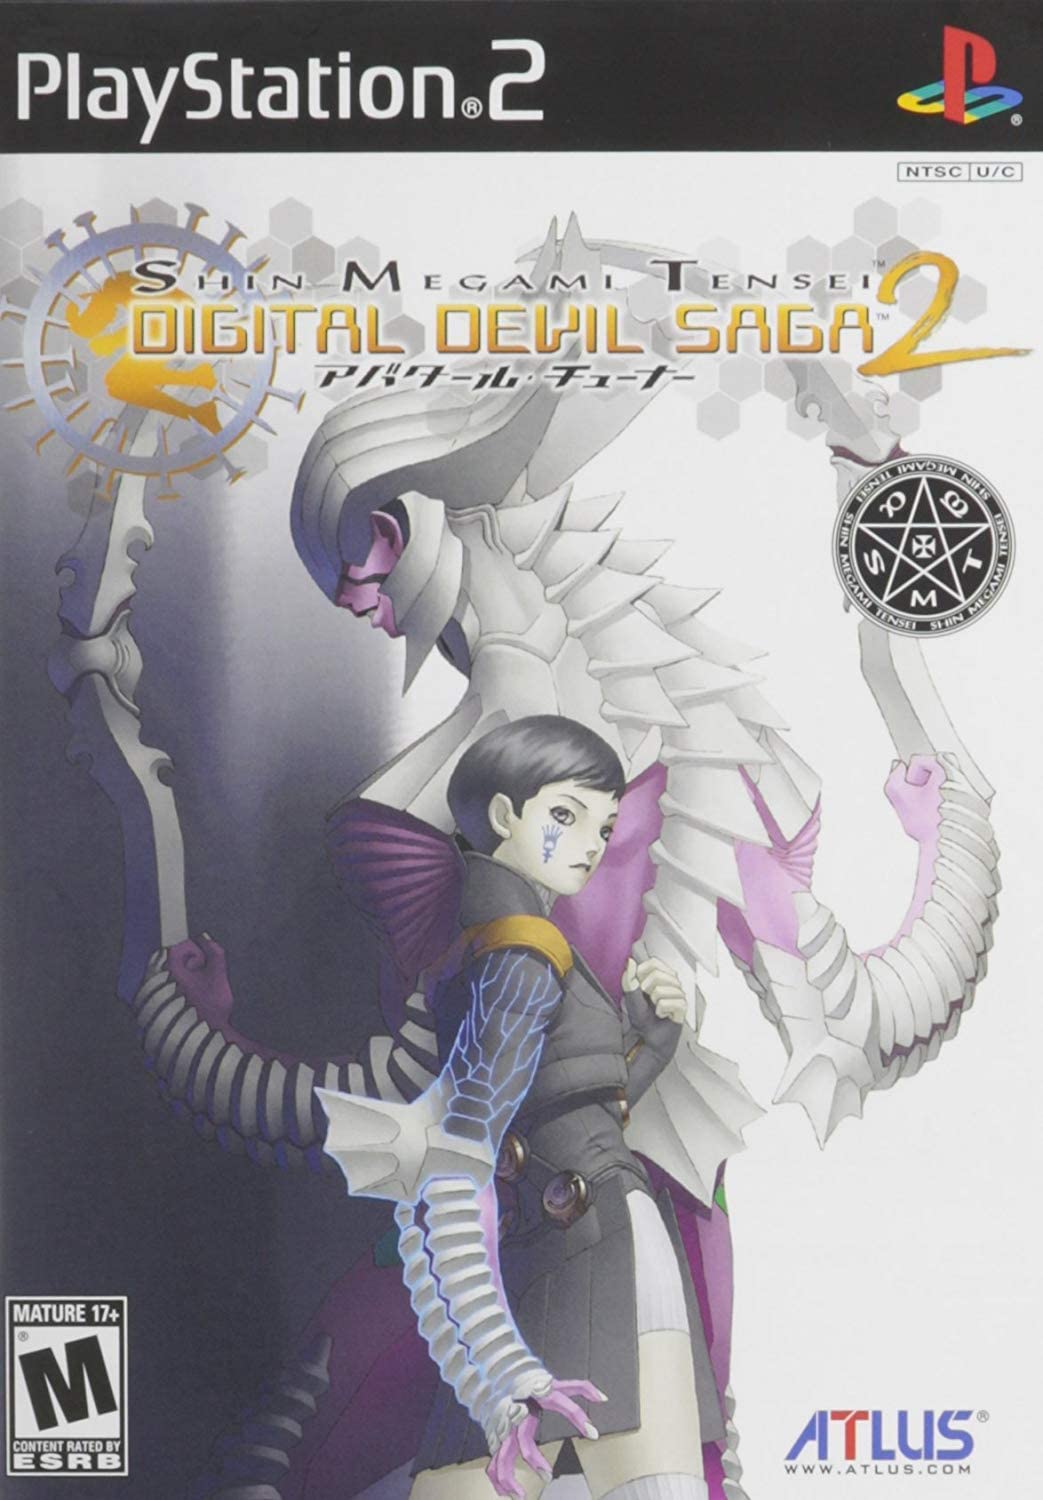 Shin Megami Tensei: Digital Devil Saga 2 player count stats